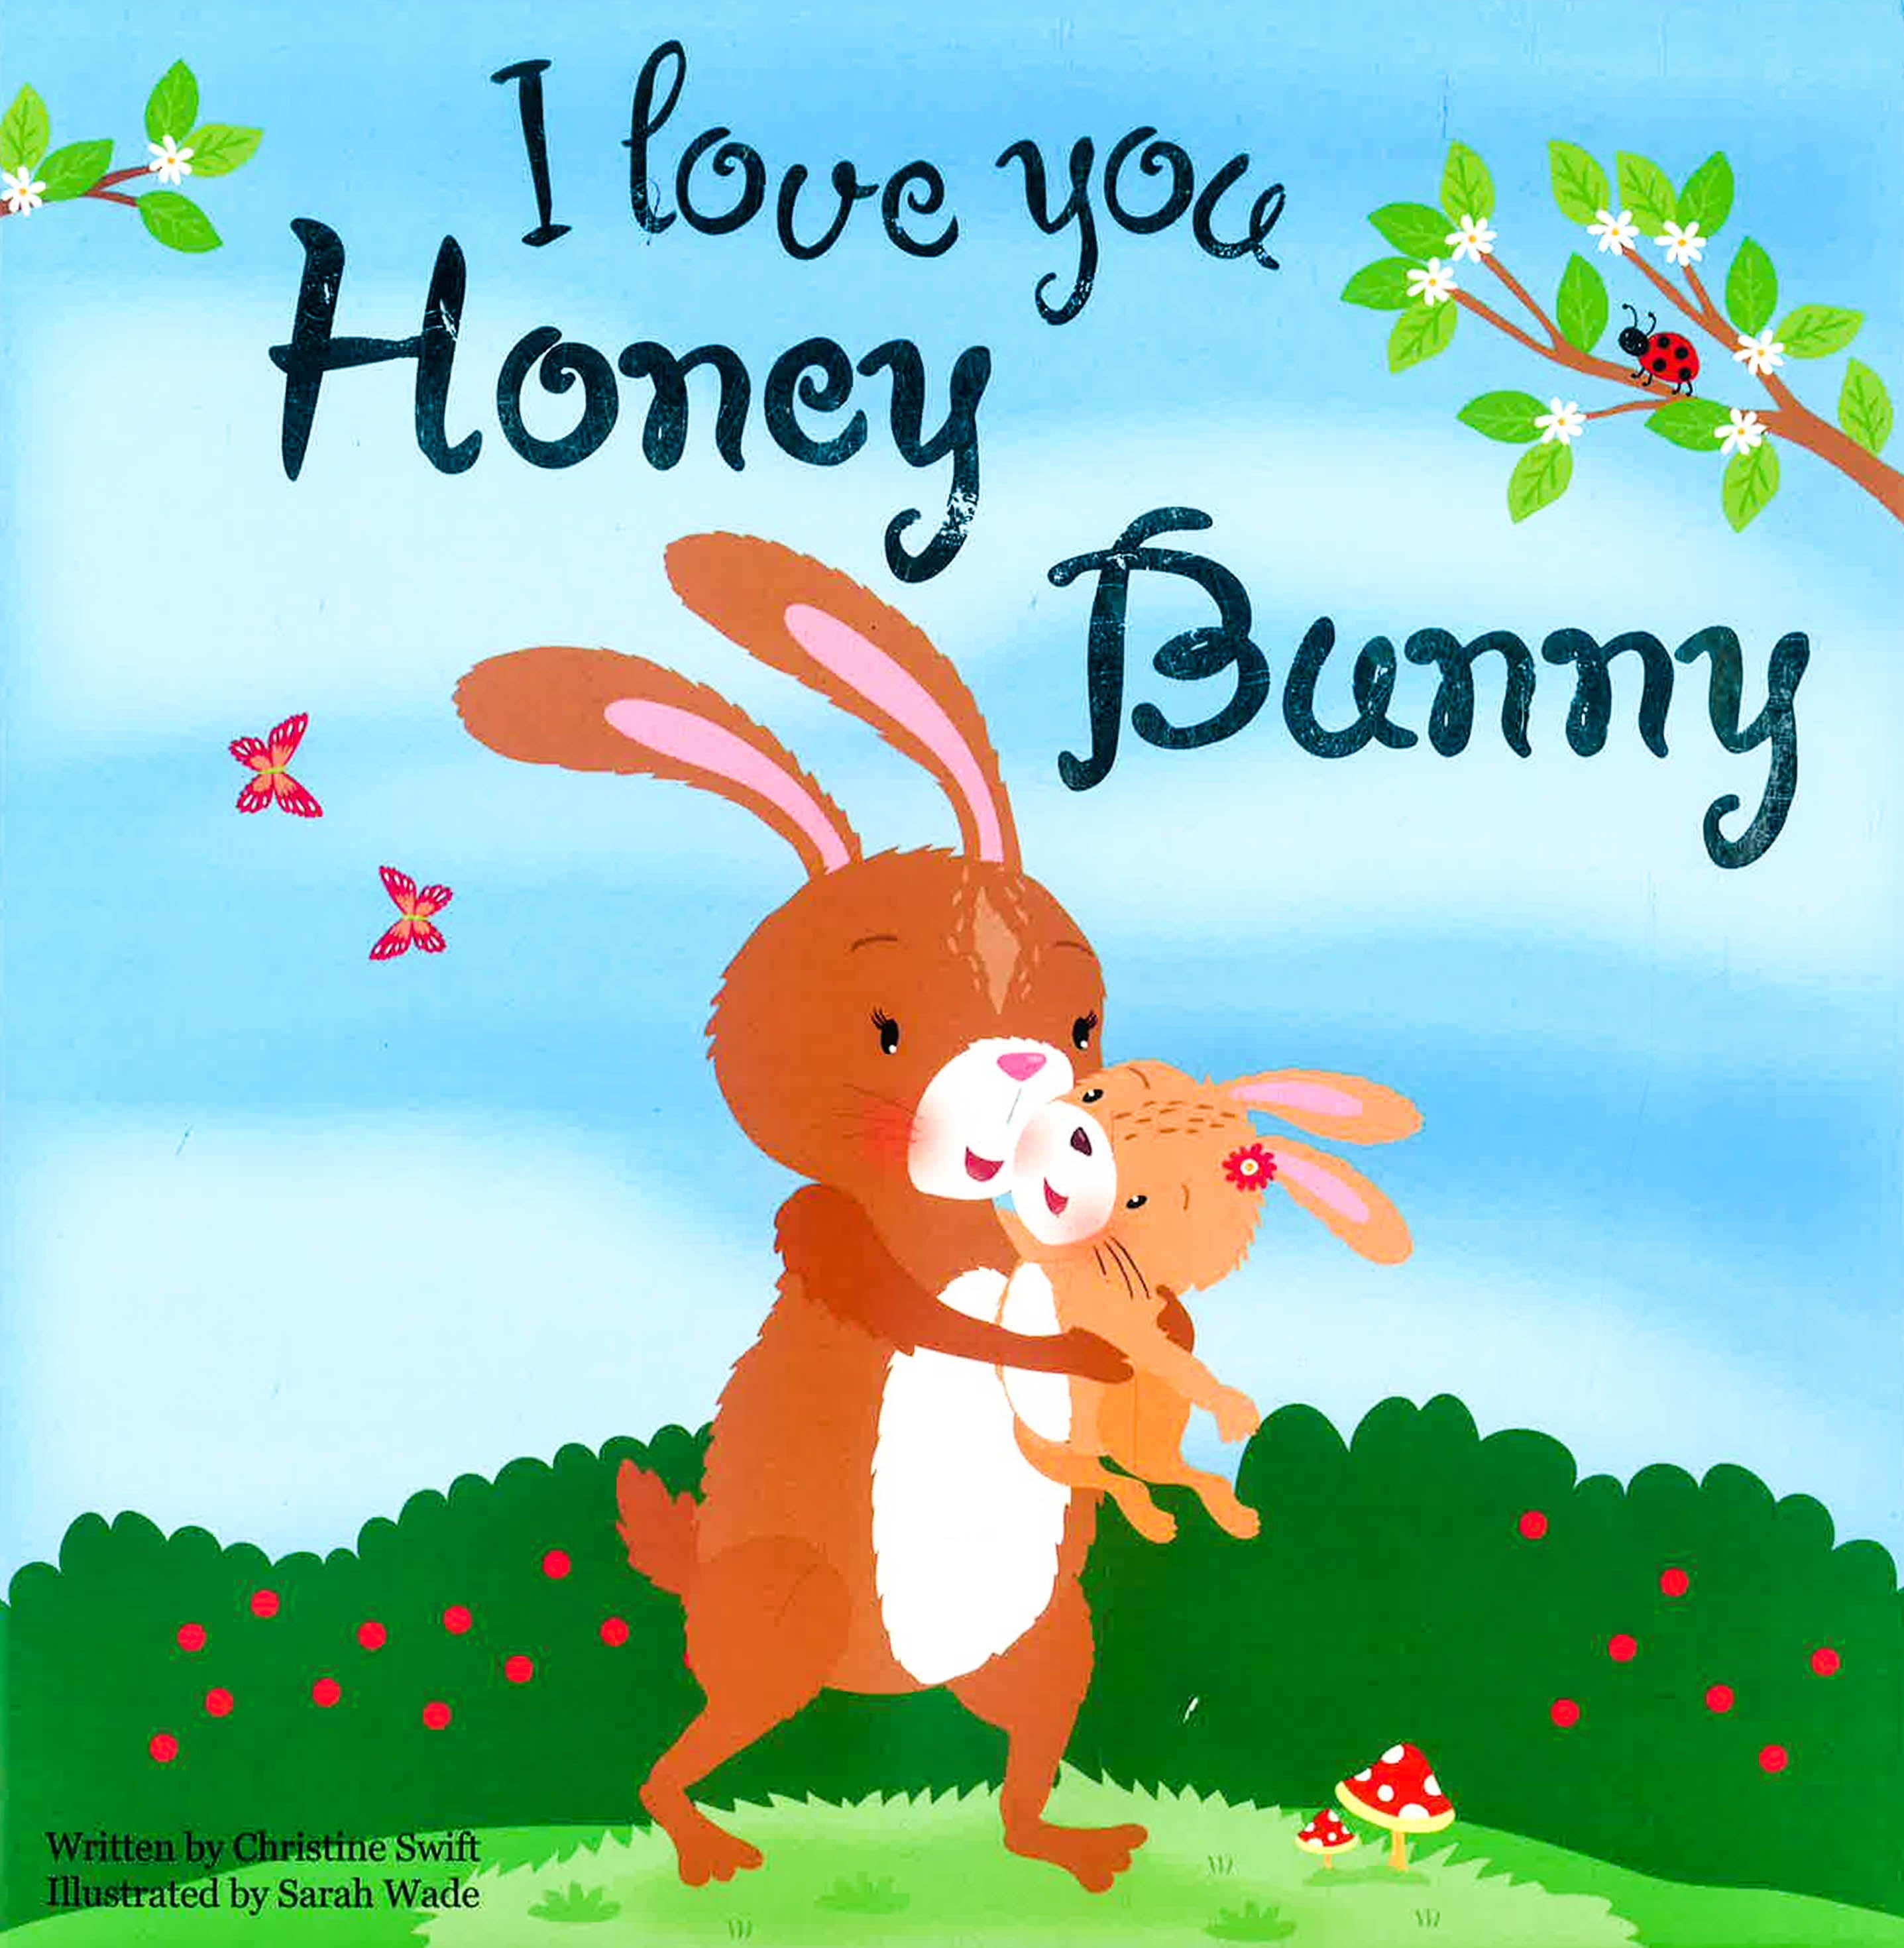 Love You Honey Bunny